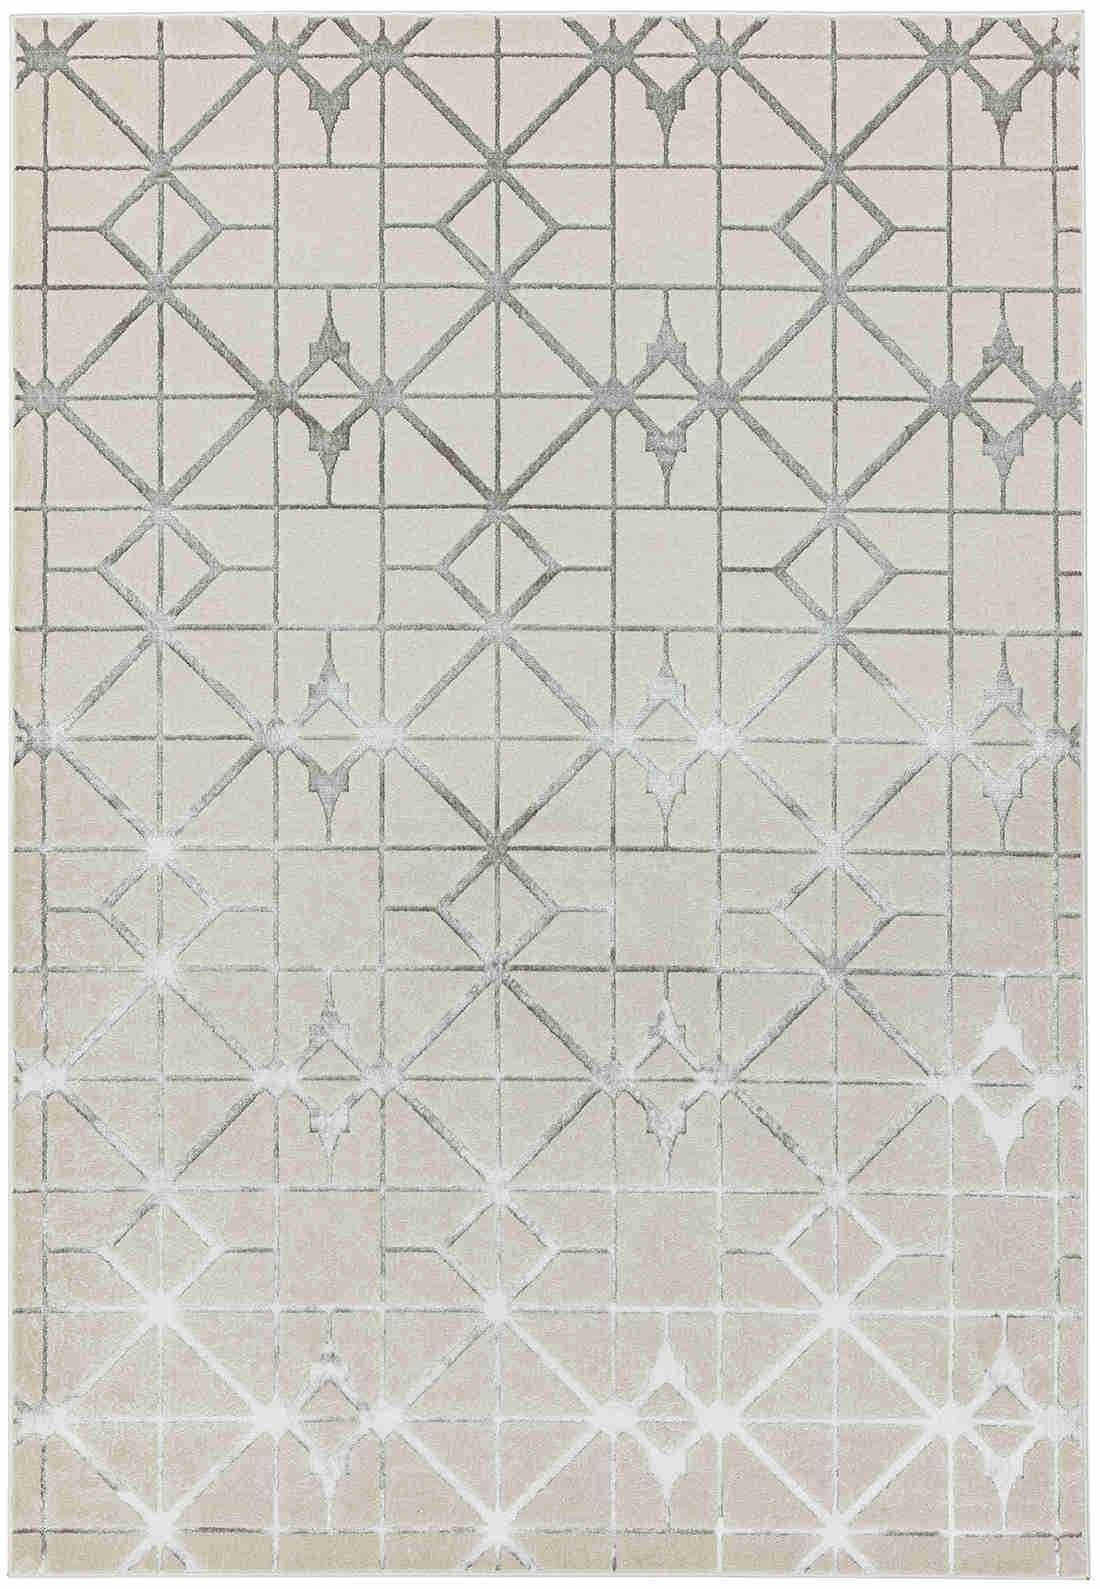 Cream rug with silver lattice design